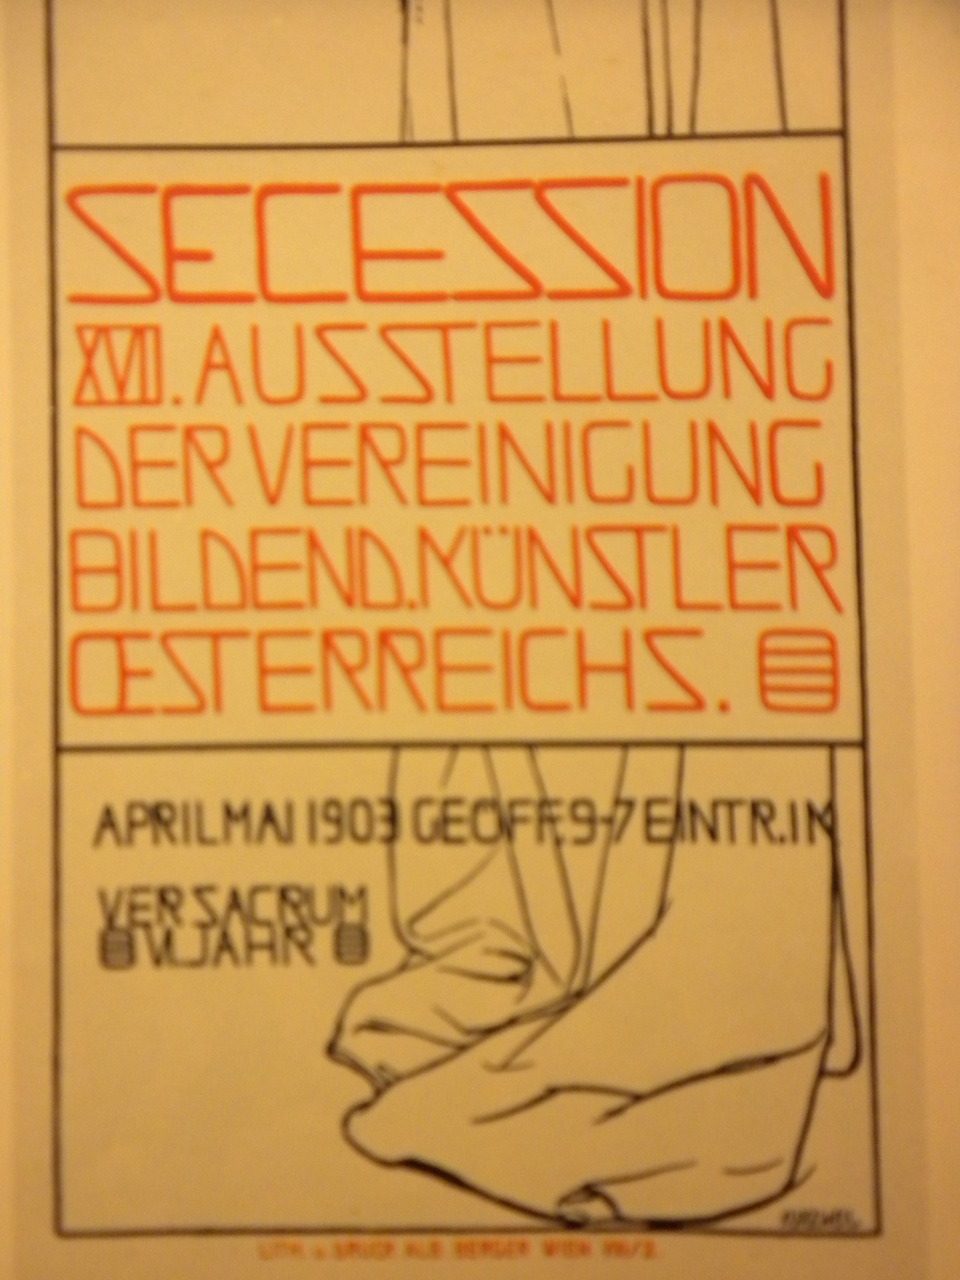 vienna secession typeface